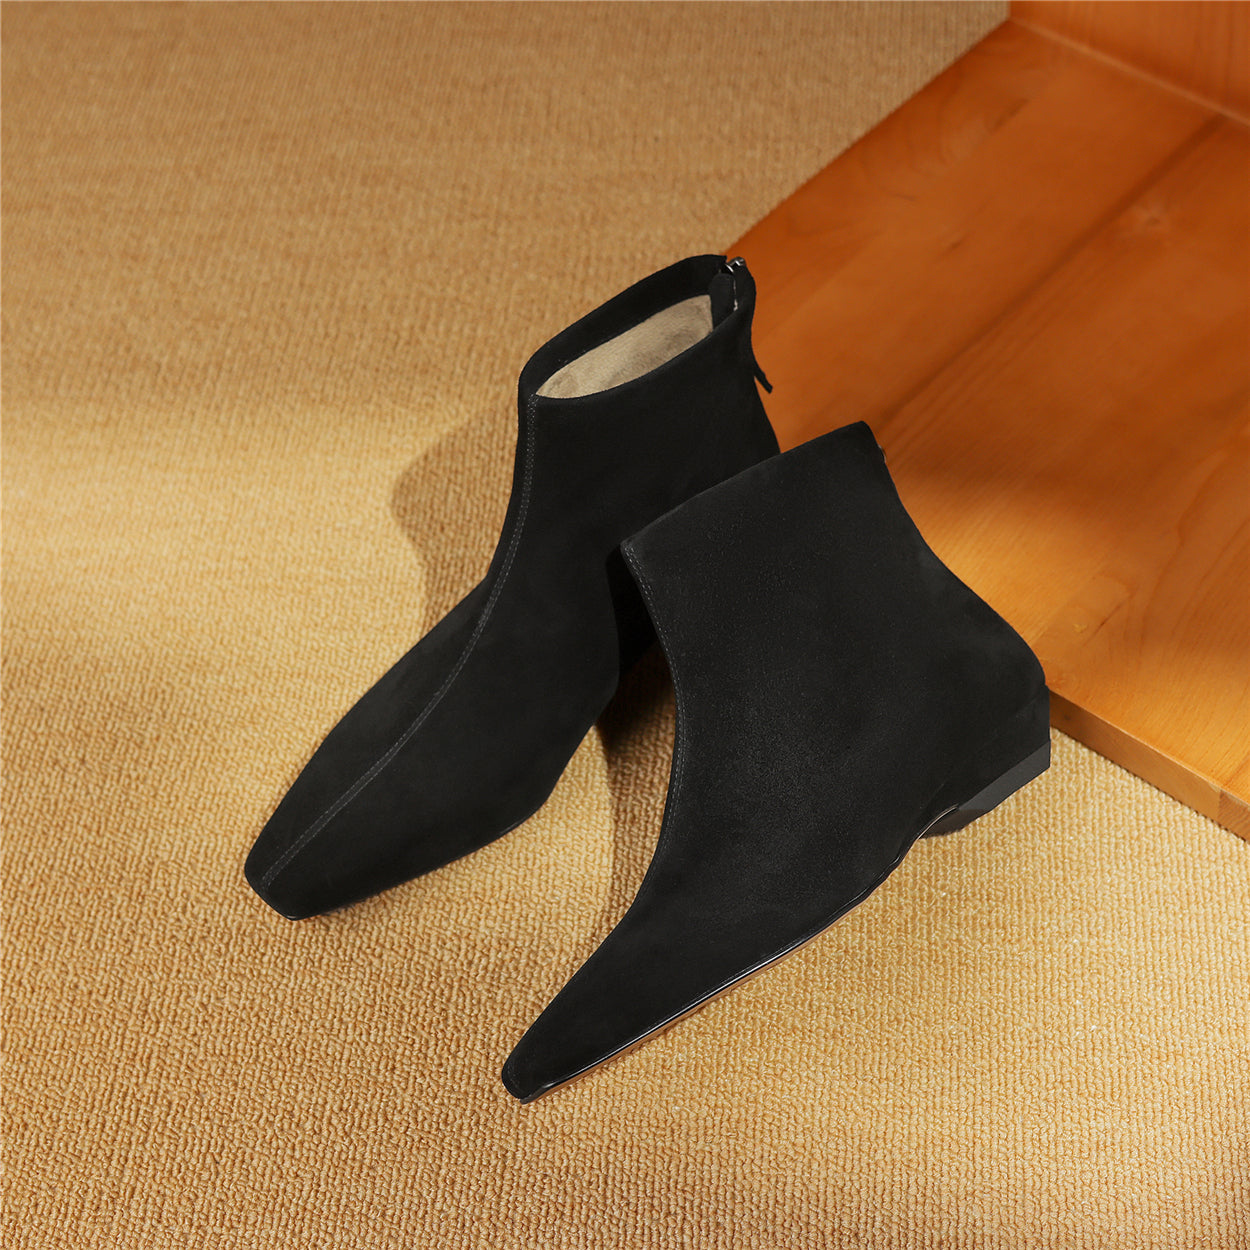 TinaCus Suede Leather Handmade Women's Low Heel Zip Up Ankle Boots